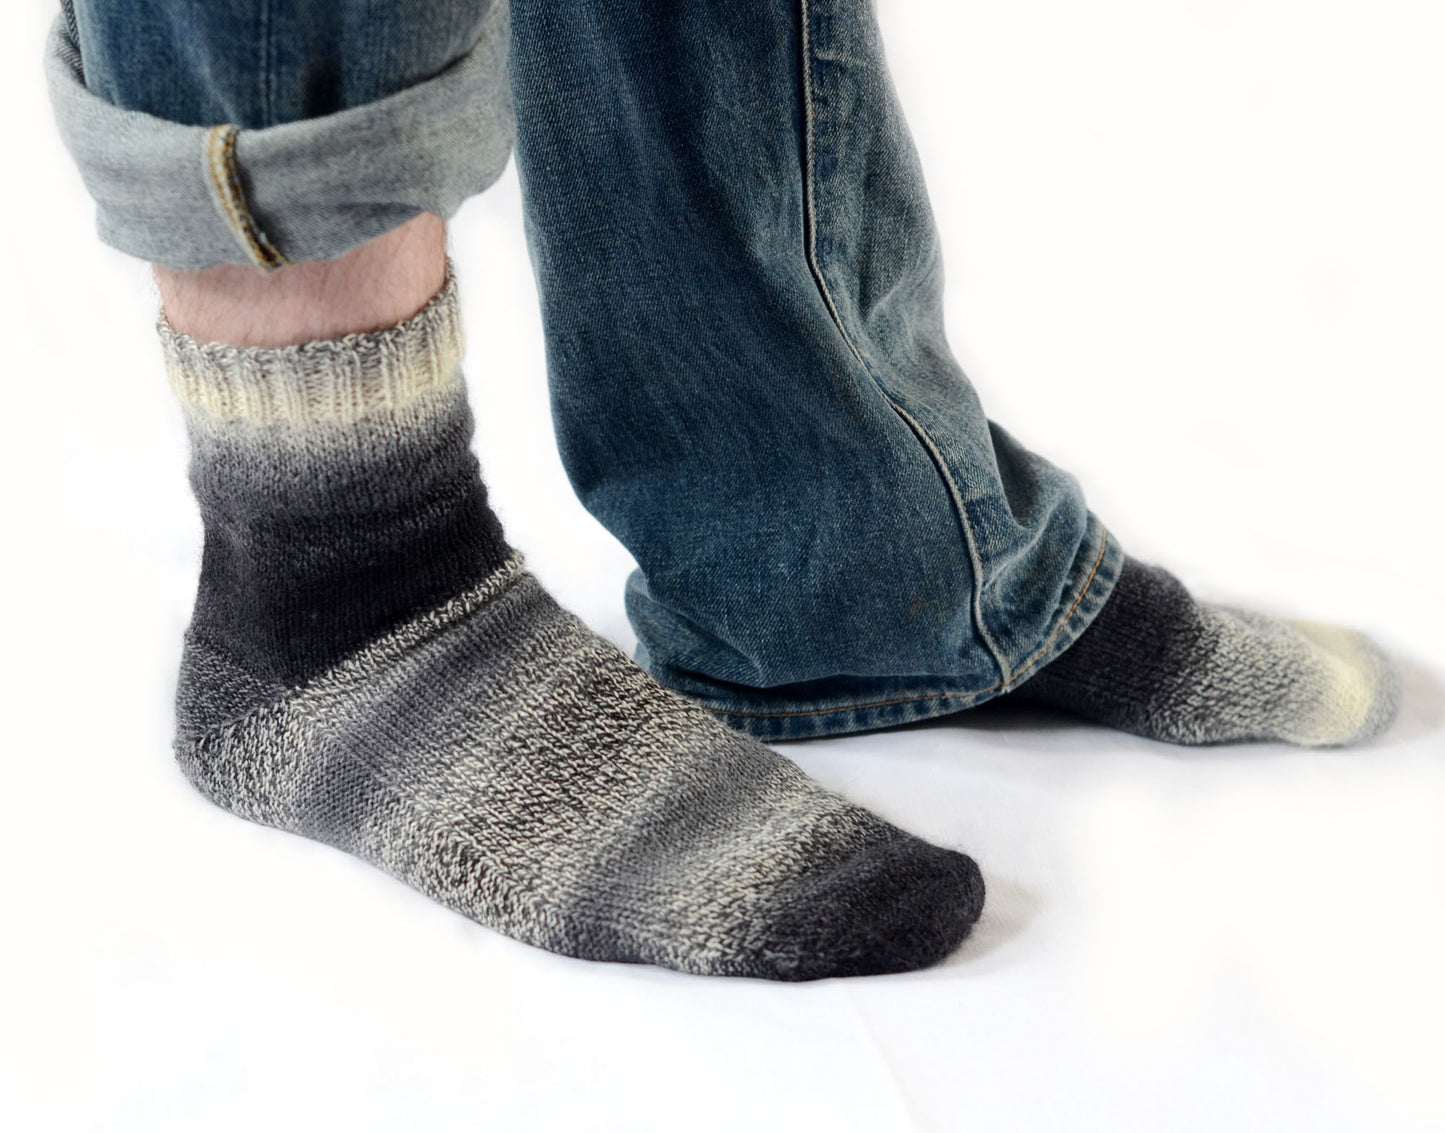 Wintersmith Socks Knitting Pattern - Digital Download